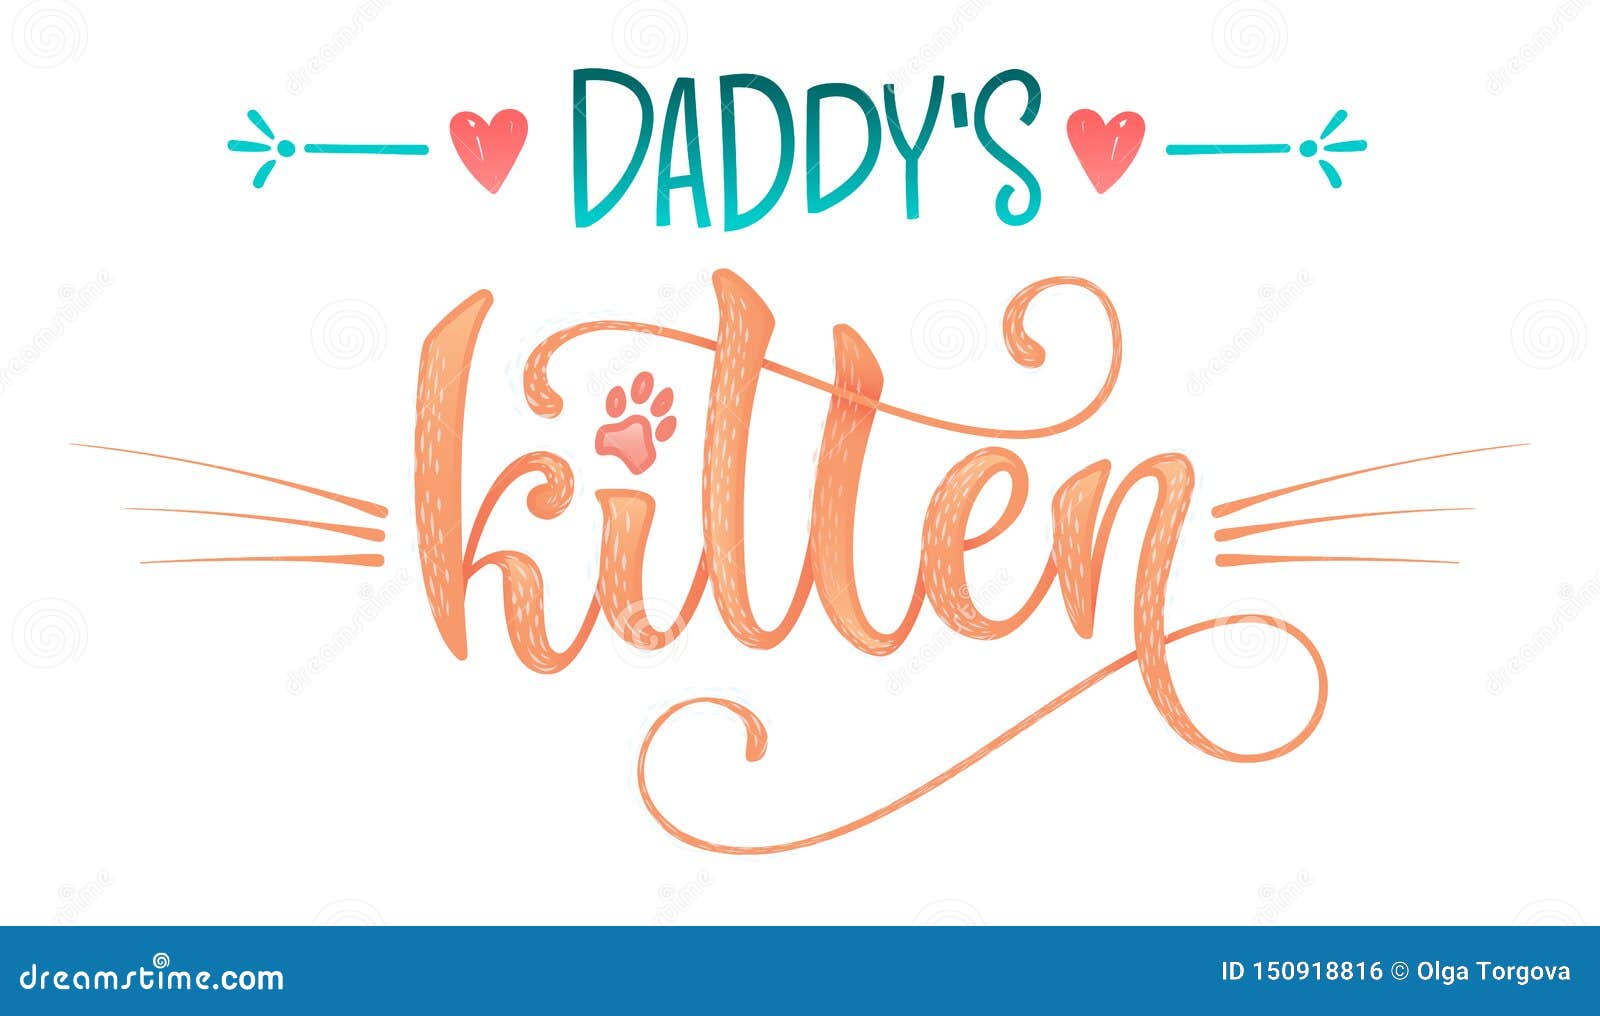 Daddys little kitten